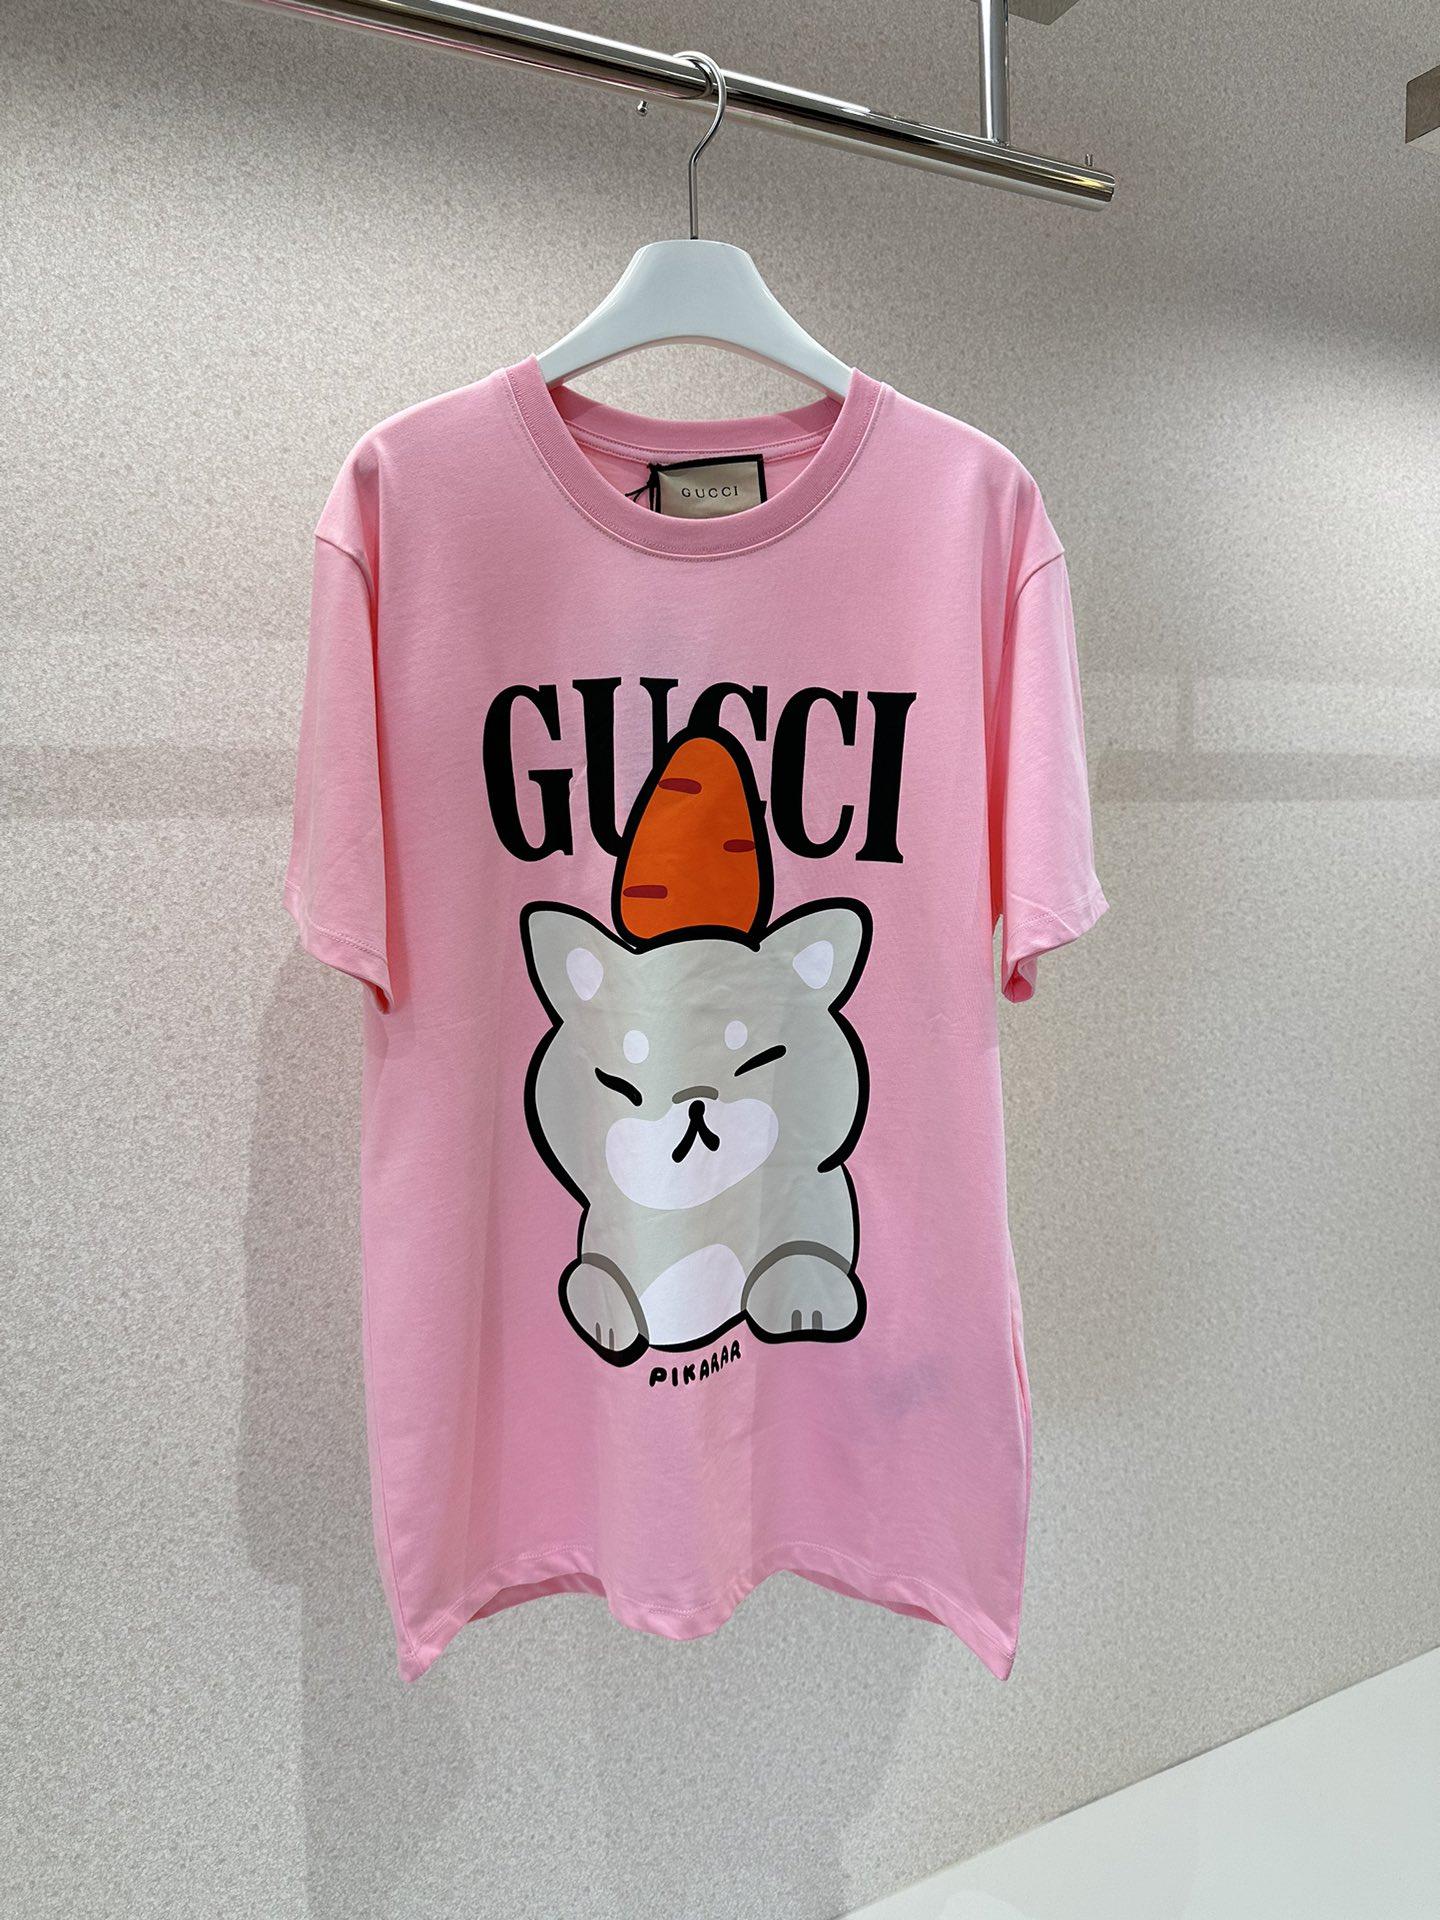 gucci-animal-print-cotton-t-shirt-7221_16844049042-1000